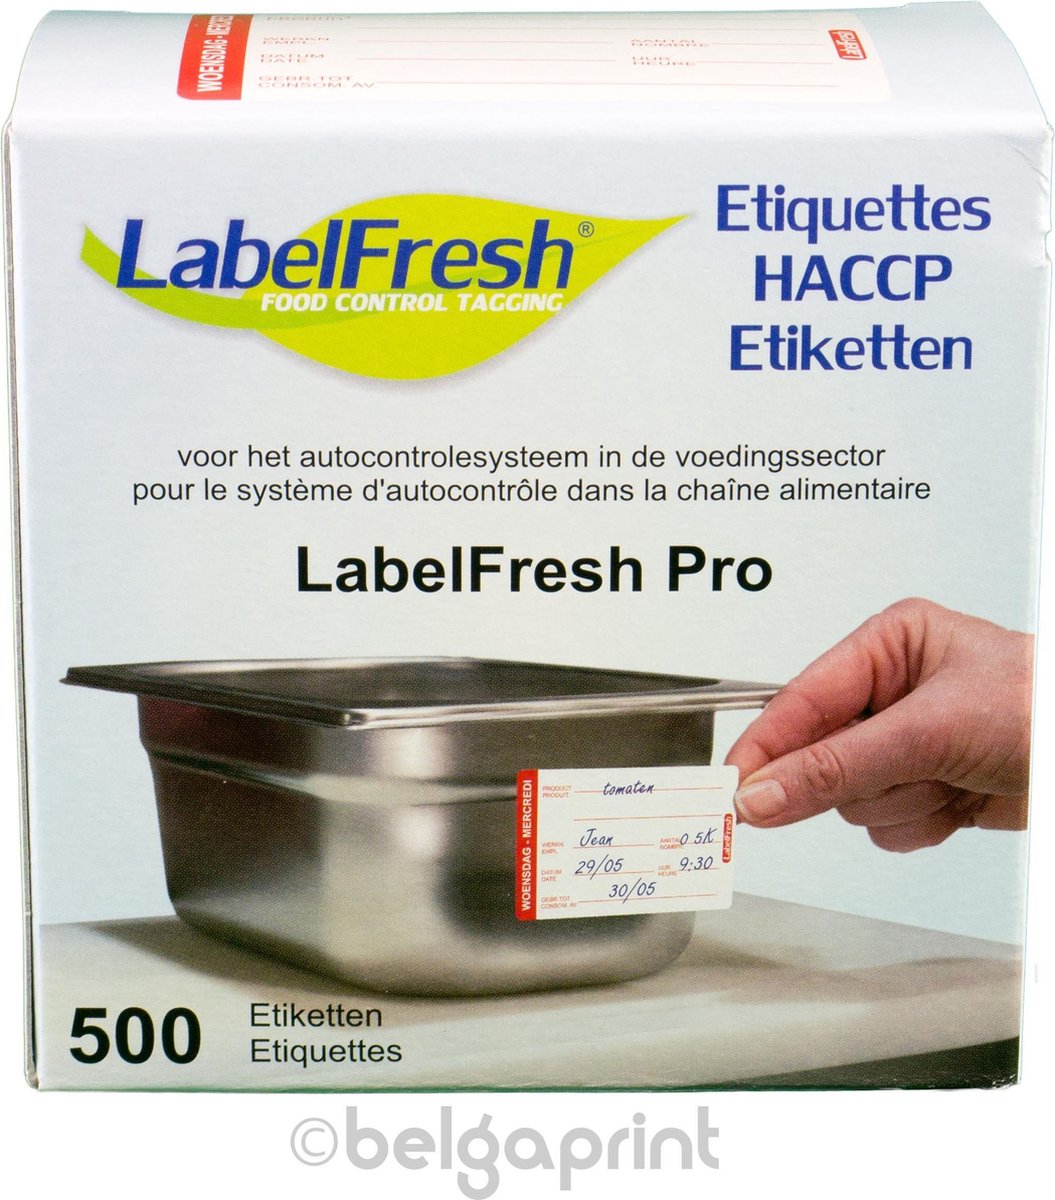 500 LabelFresh Pro - 70x45 mm - woensdag-mercredi - HACCP etiketten / stickers